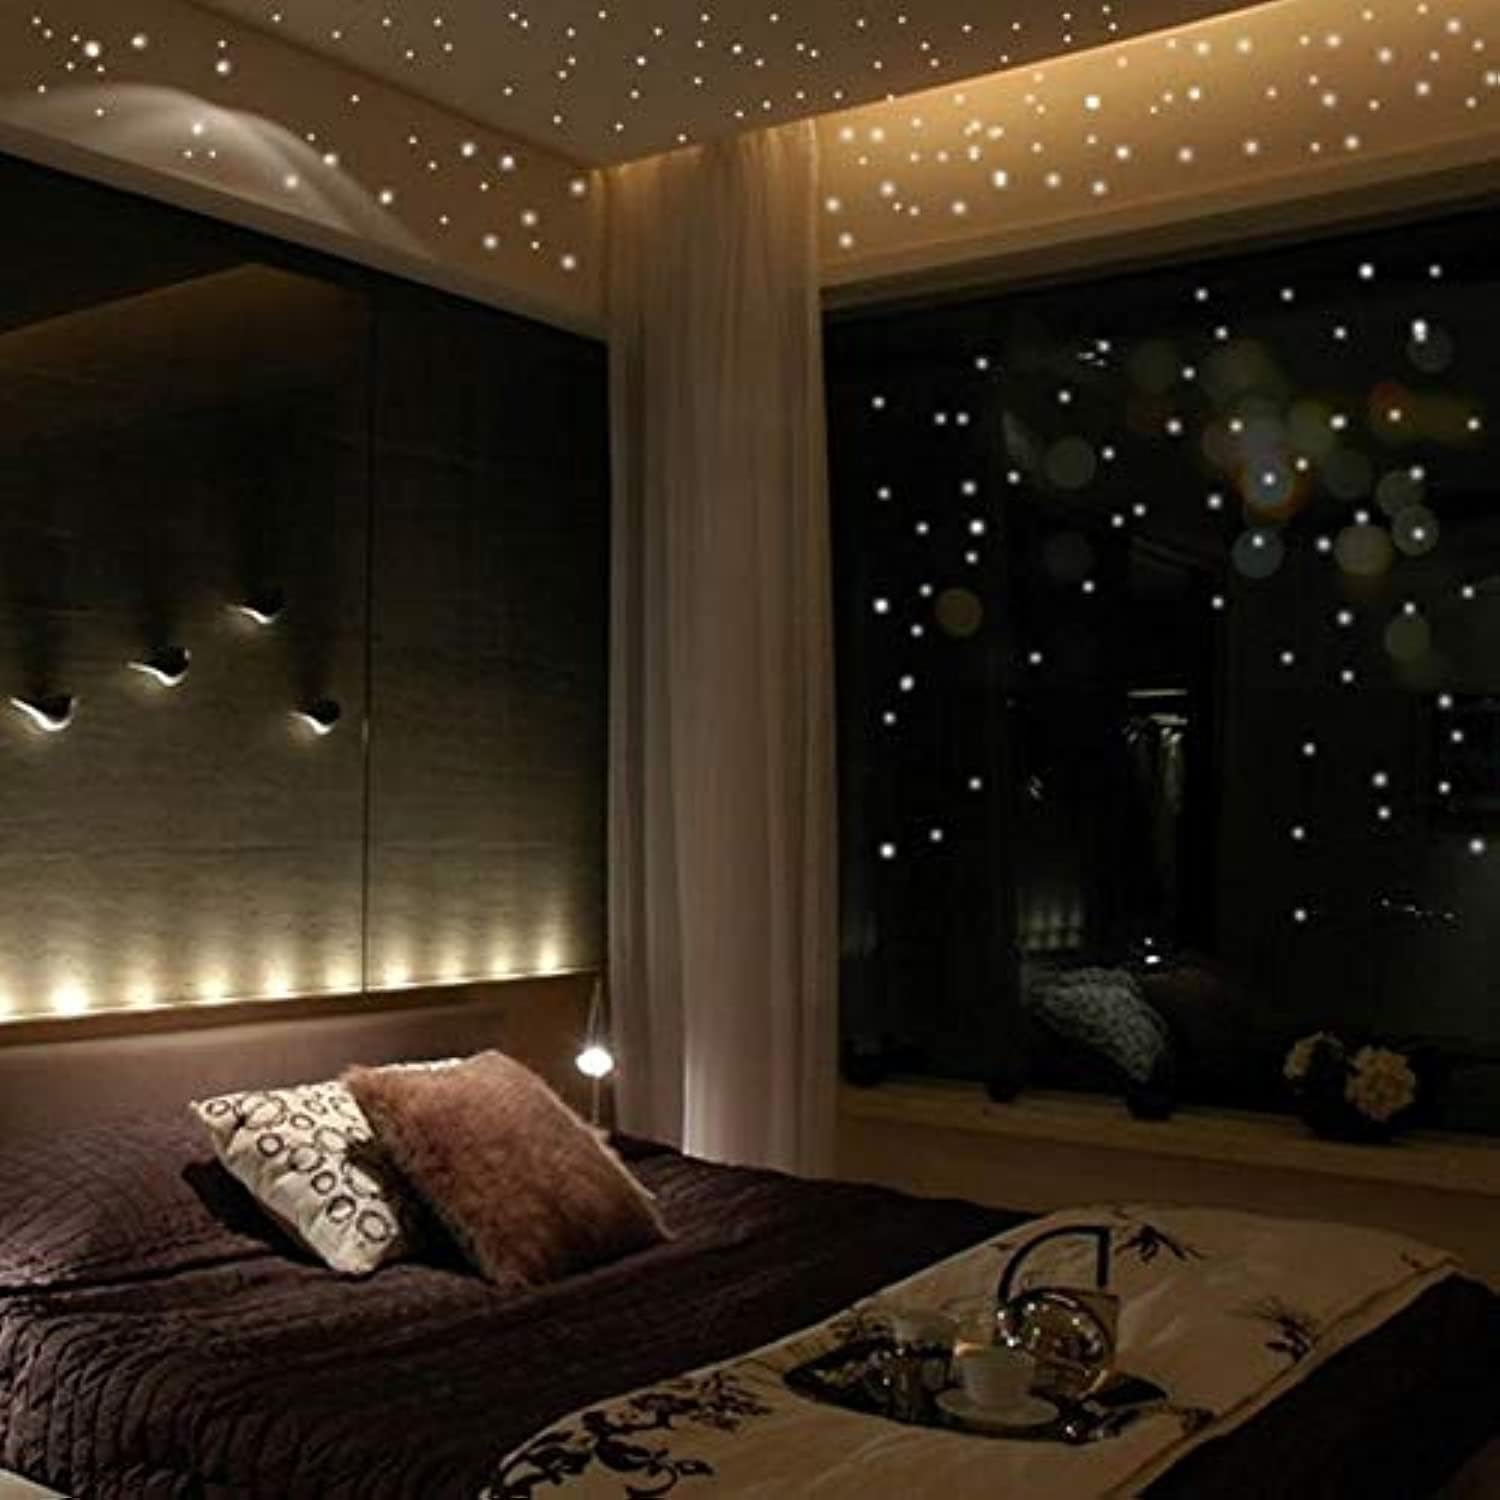 400Pcs Glow In The Dark Star Wall Stickers Round Dot Luminous Kids Room Decor Vinilos Decorativos Bedroom Decoration, Multicolor